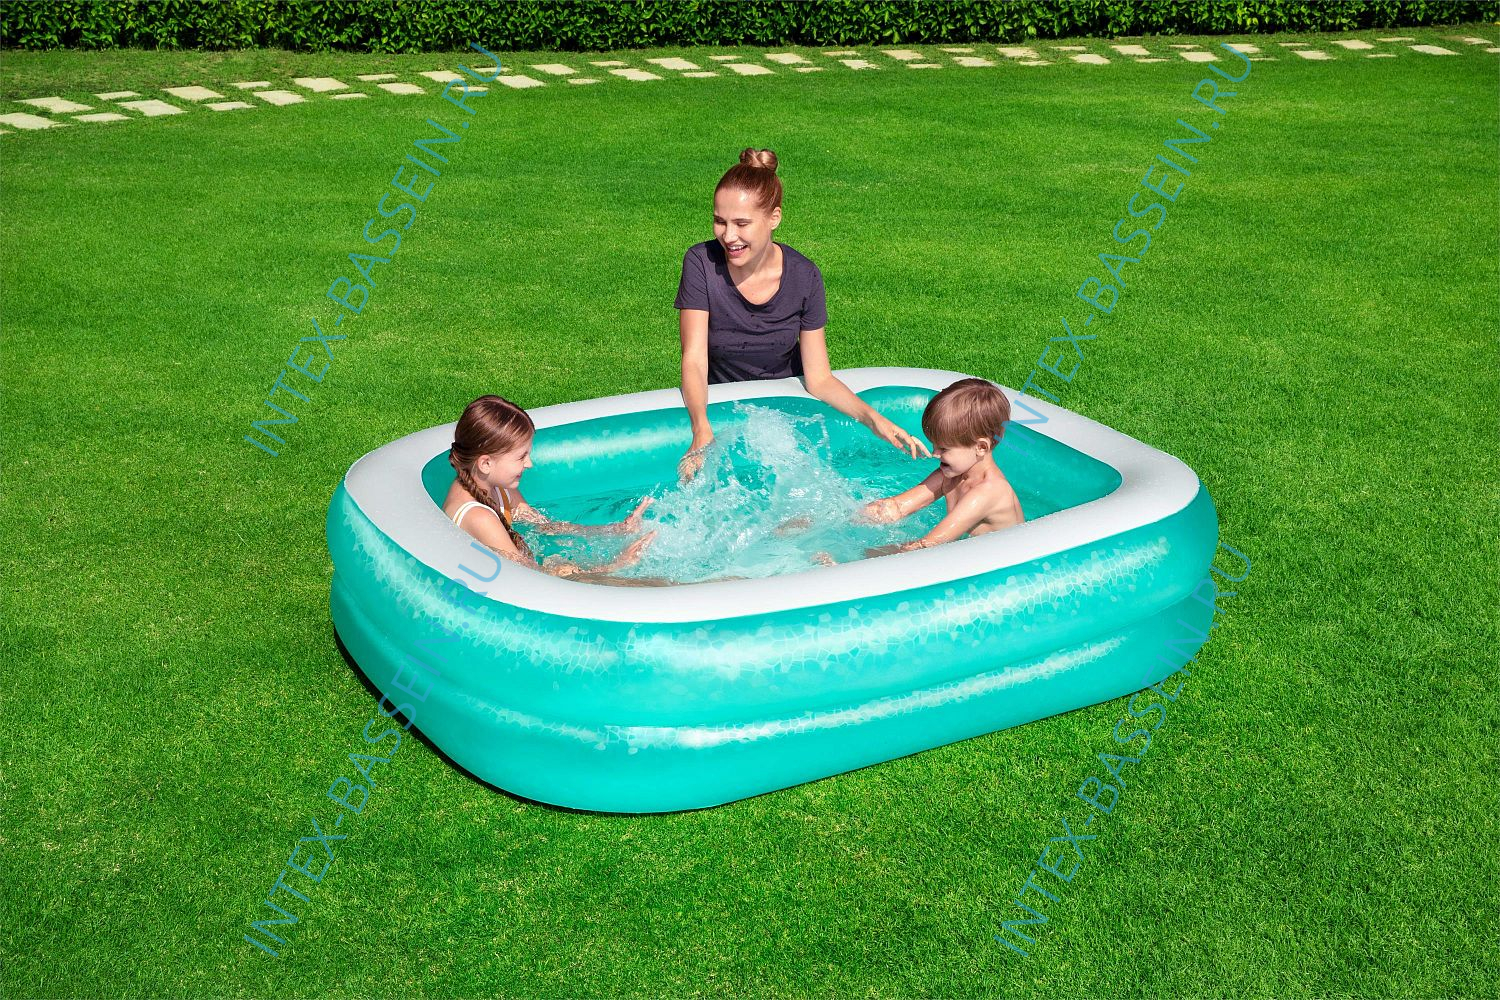 Детский надувной бассейн Bestway 2.01 x 1.5 x 0.51 м, артикул 54005